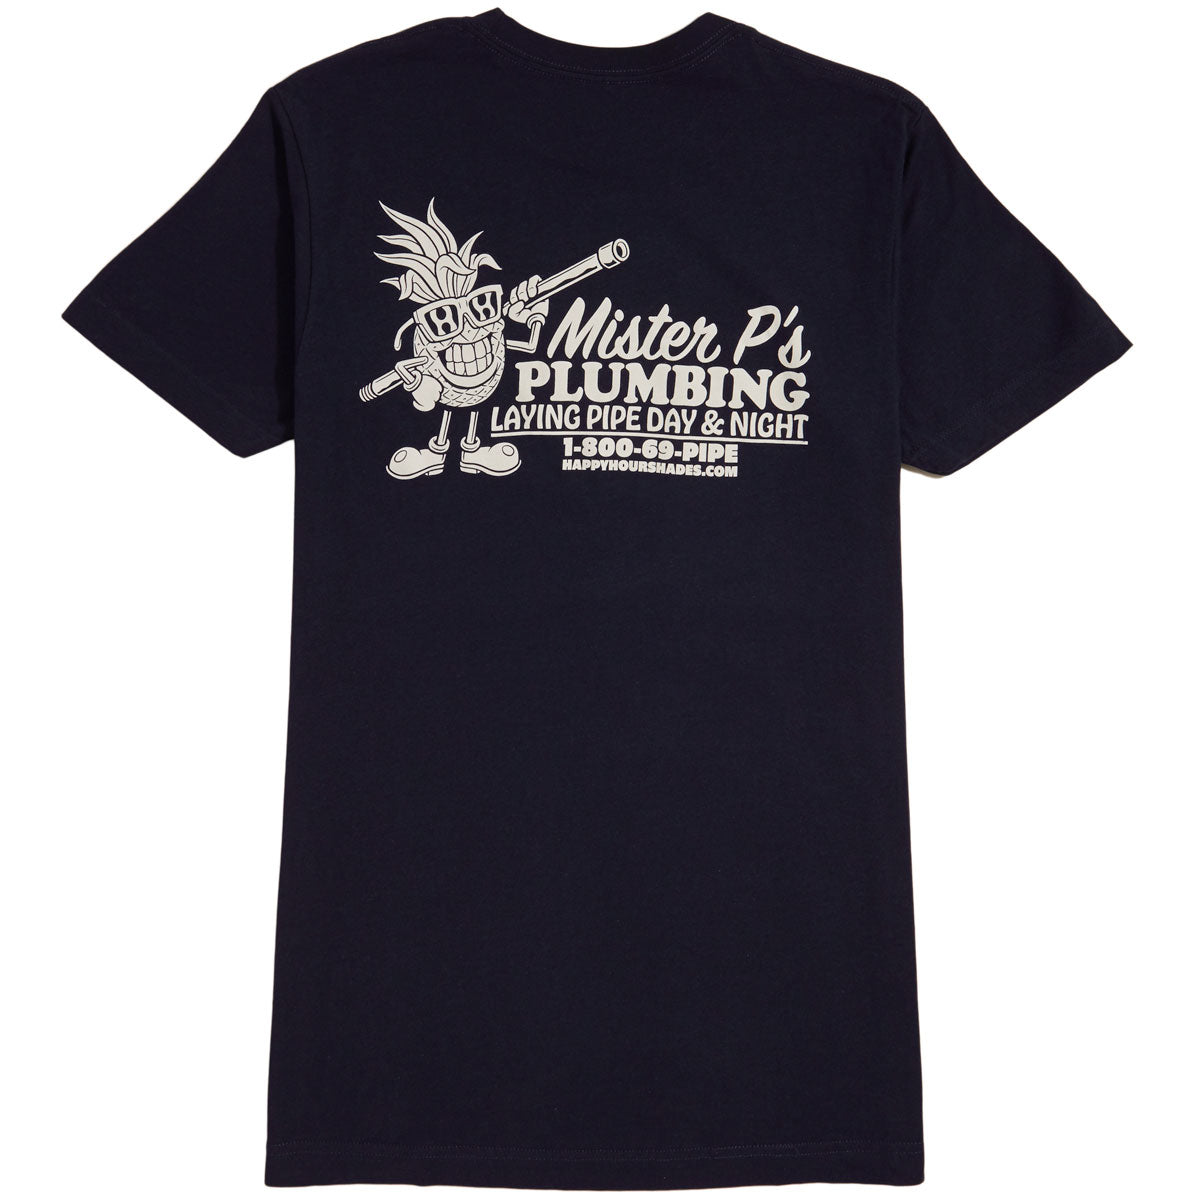 Happy Hour Mr. P's Plumbing T-Shirt - Navy image 1